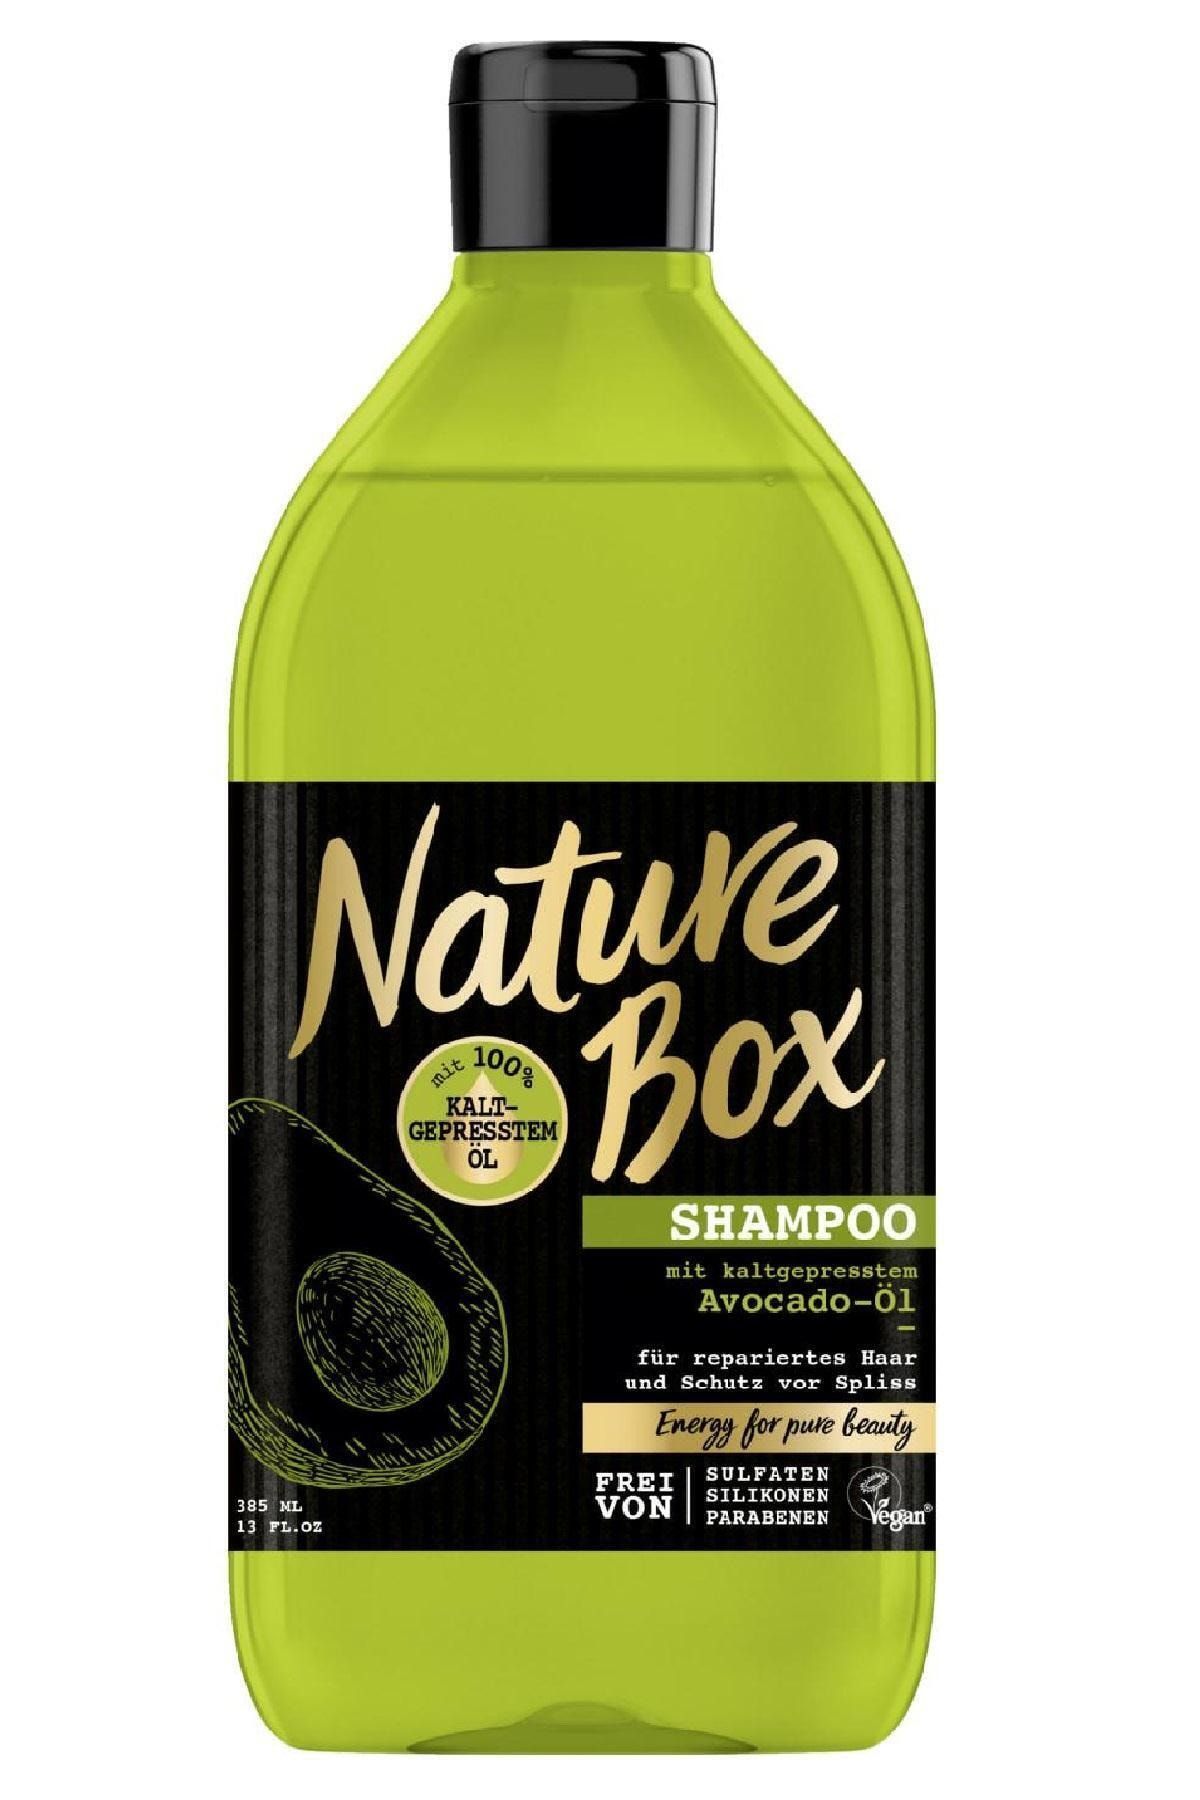 Nature Box шампуни. Nature Box. Шампунь авокадо натуре бокс. Nature Box шампунь отзывы. Natural box